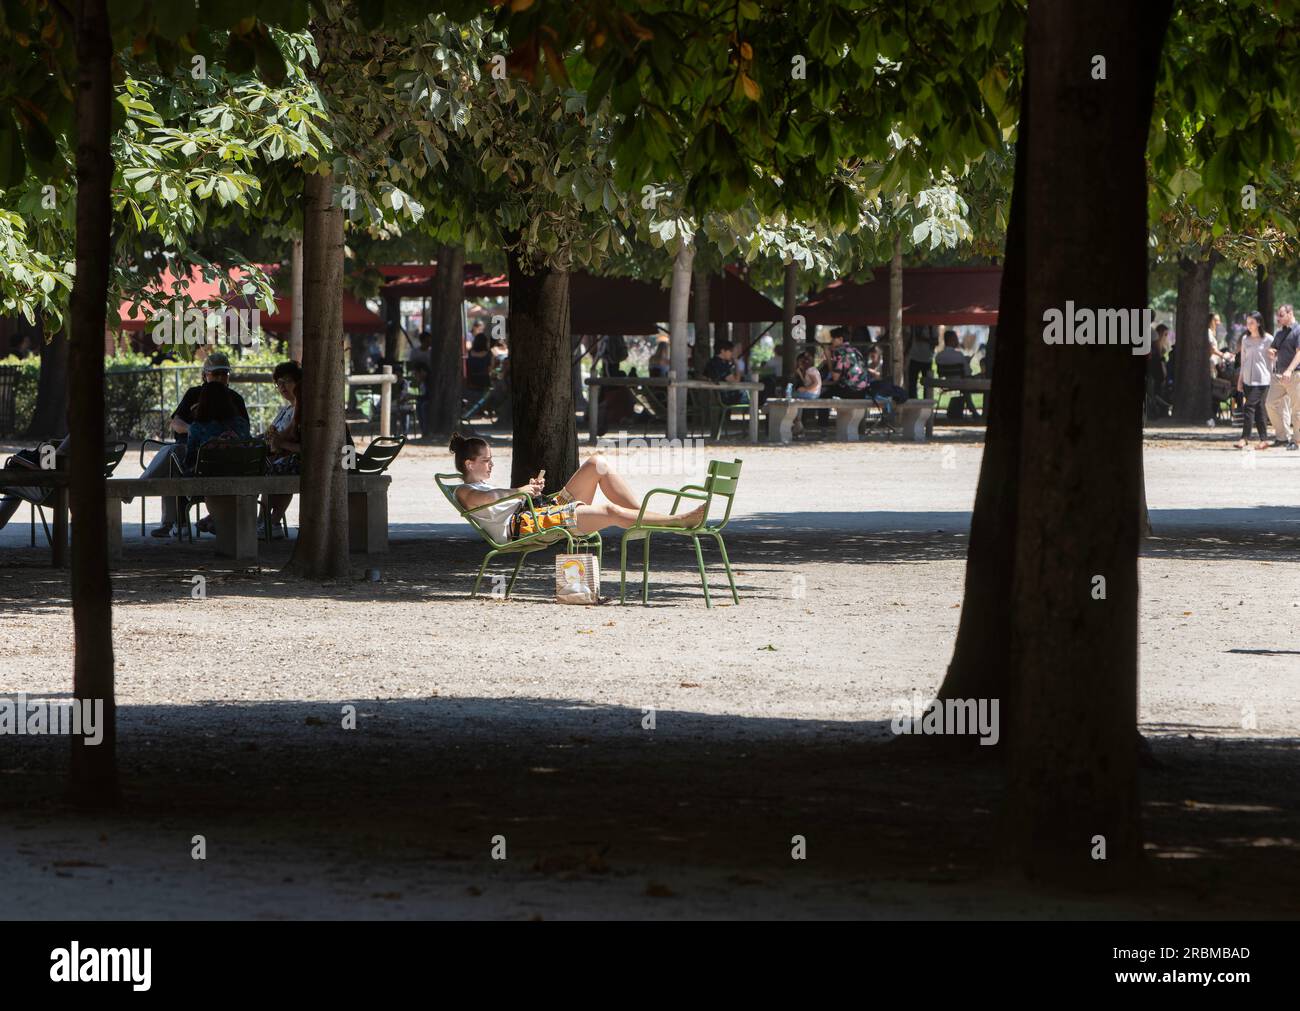 Jardin des Tuileries. Treelined avenues in 17th century Tuileries Garden give shade on sunny day for sunbathers. Place de la Concorde, 1 Arr Paris. Stock Photo